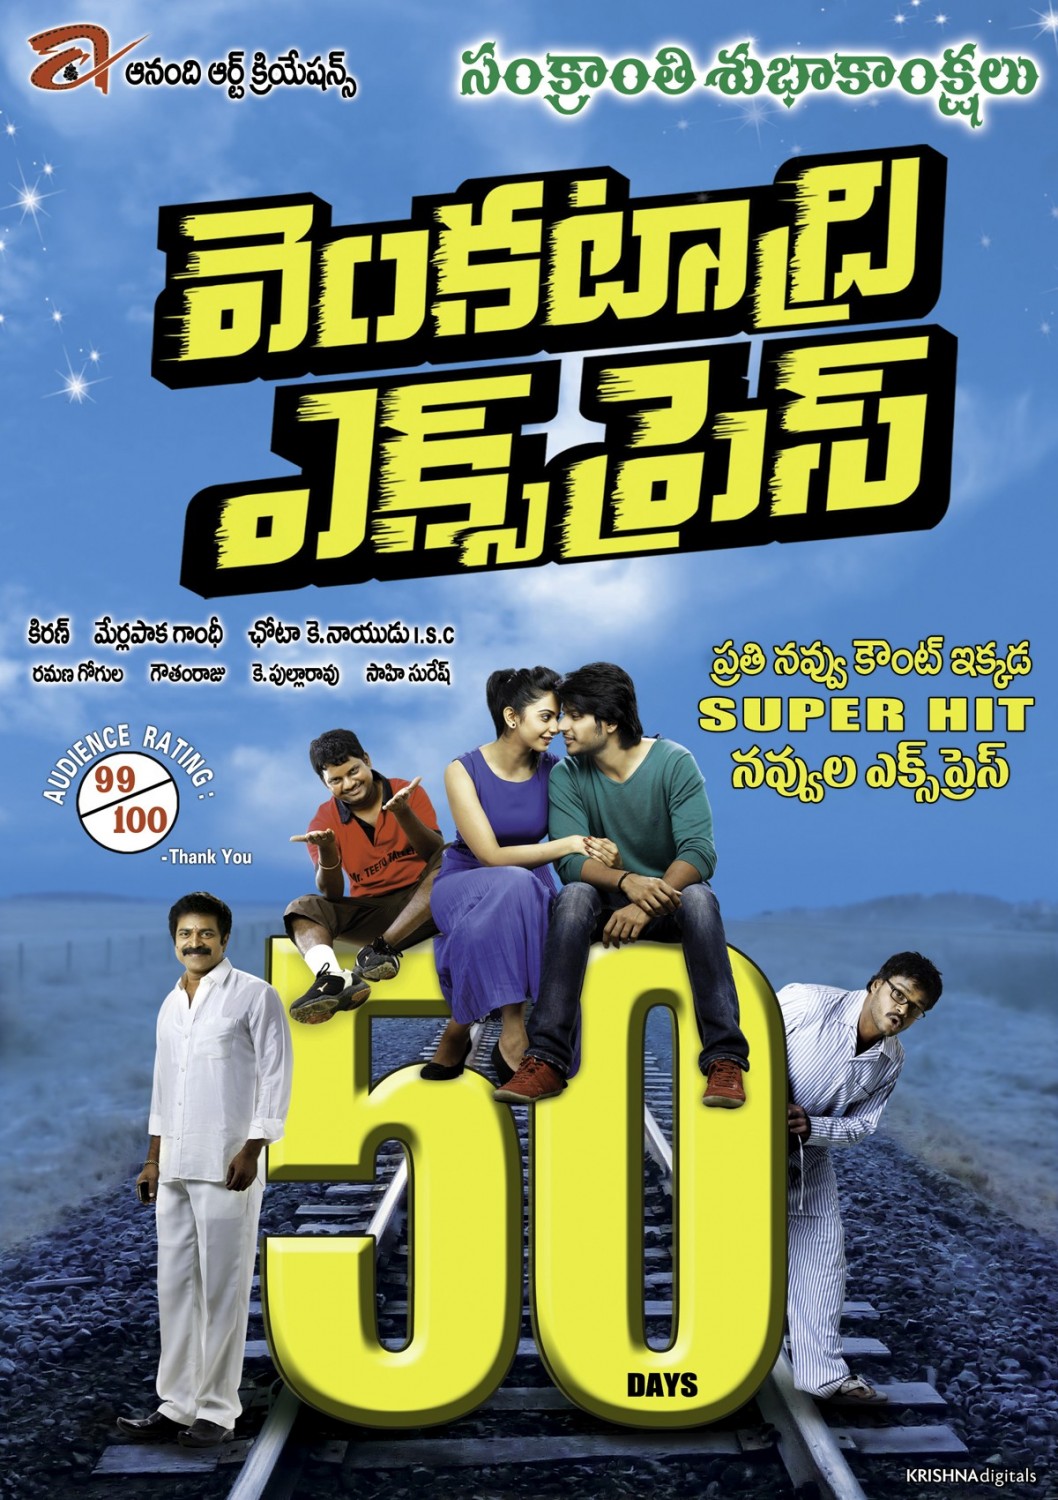 Extra Large Movie Poster Image for Venkatadri Express (#11 of 17)